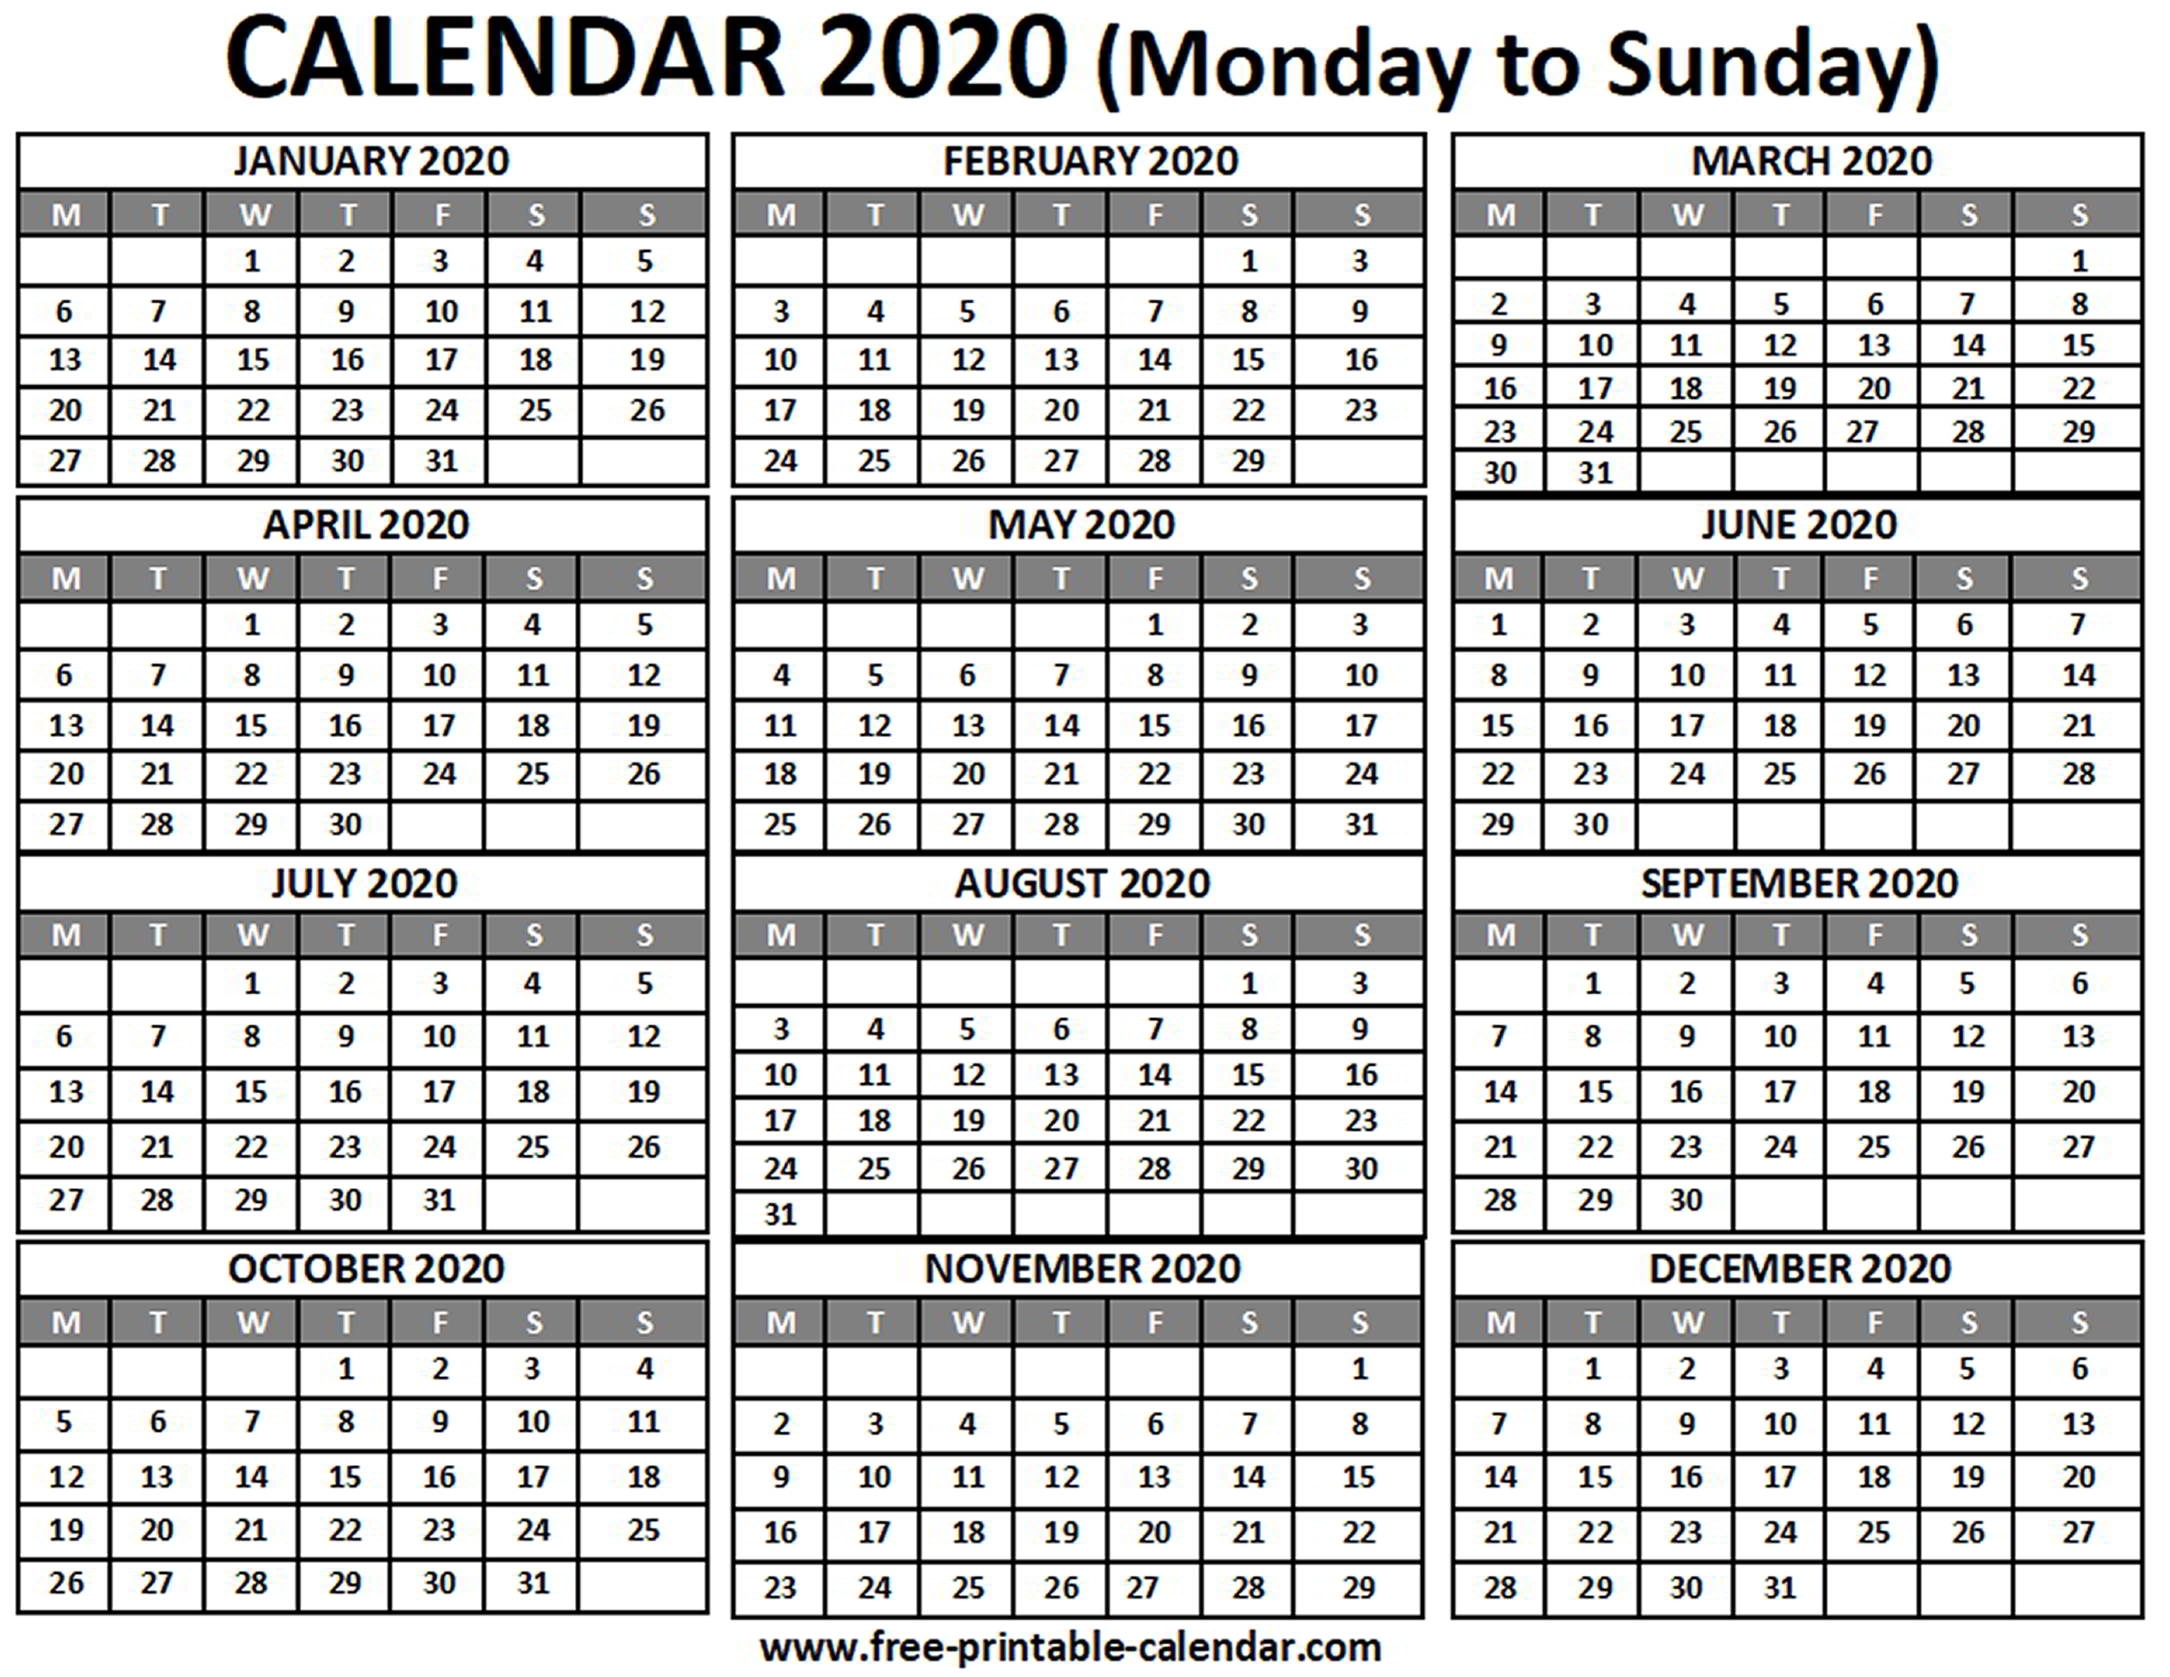 2020 Calendar - Free-Printable-Calendar regarding Free Printable Pocket Calendar 2020